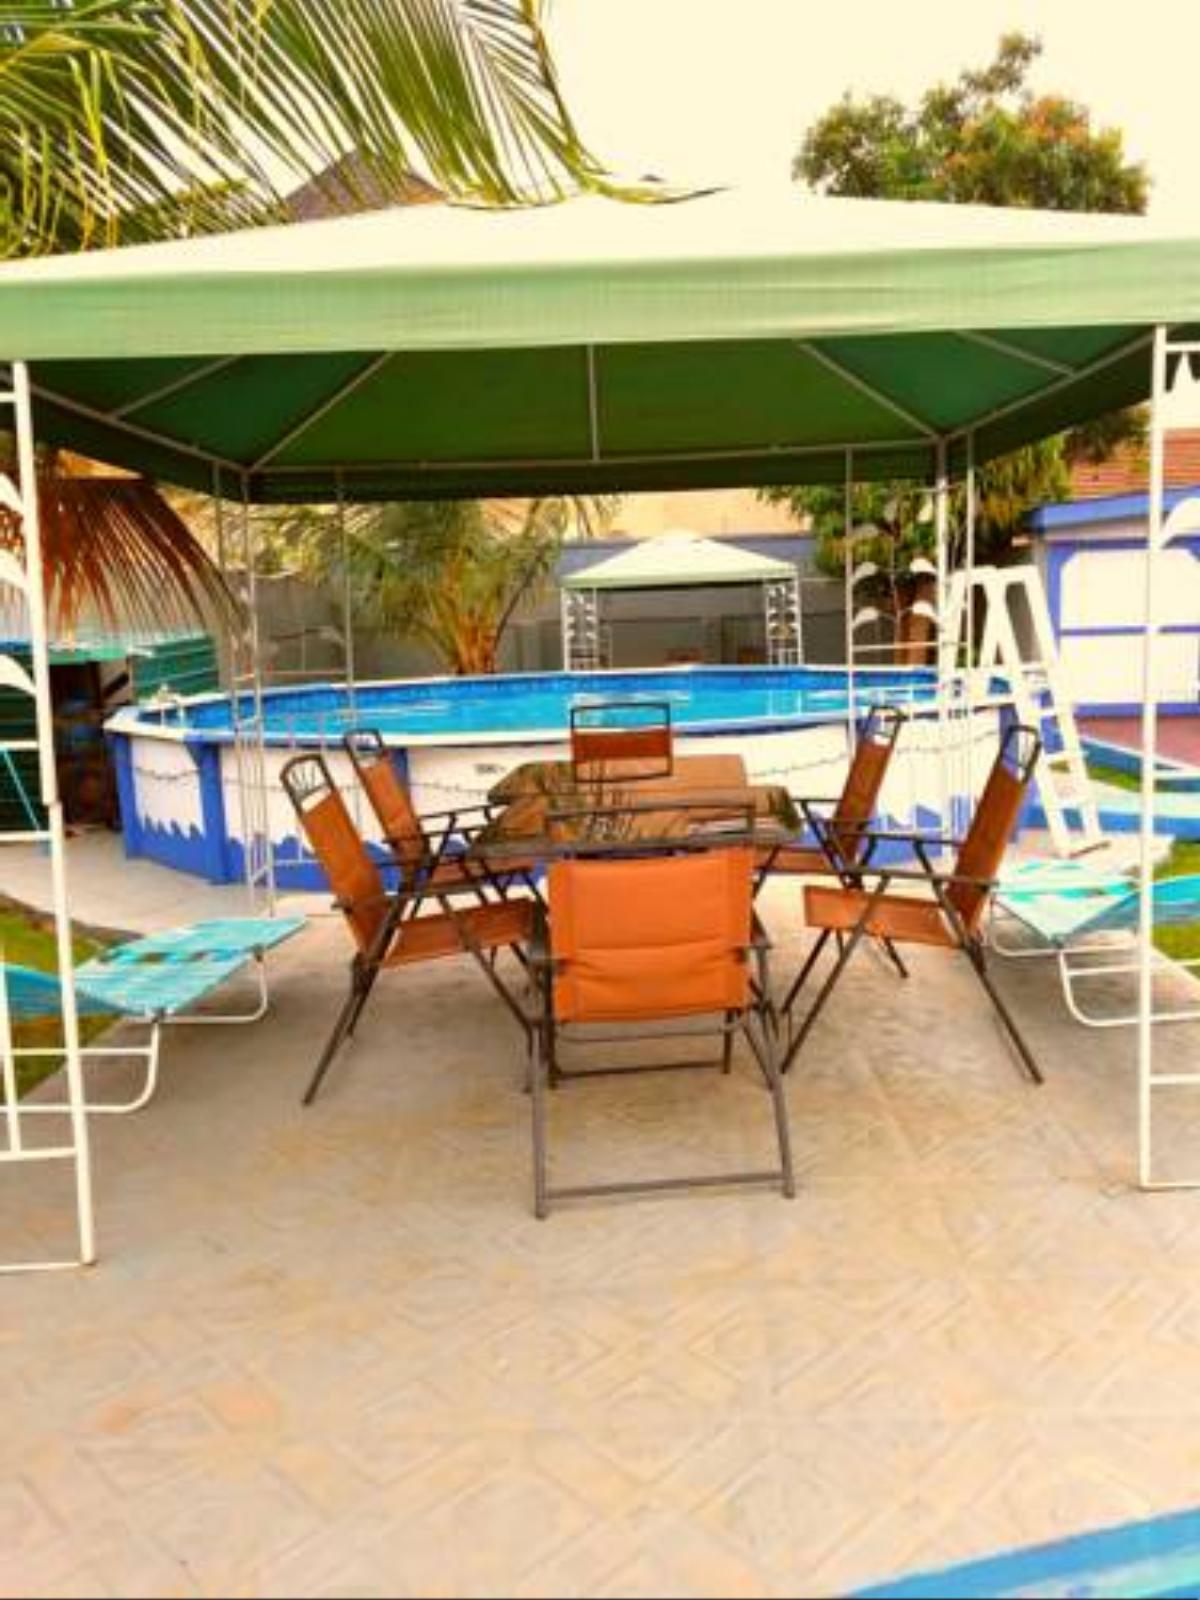 Classy 1 bedroom Villa With Pool in Accra Hotel Kwedonu Ghana